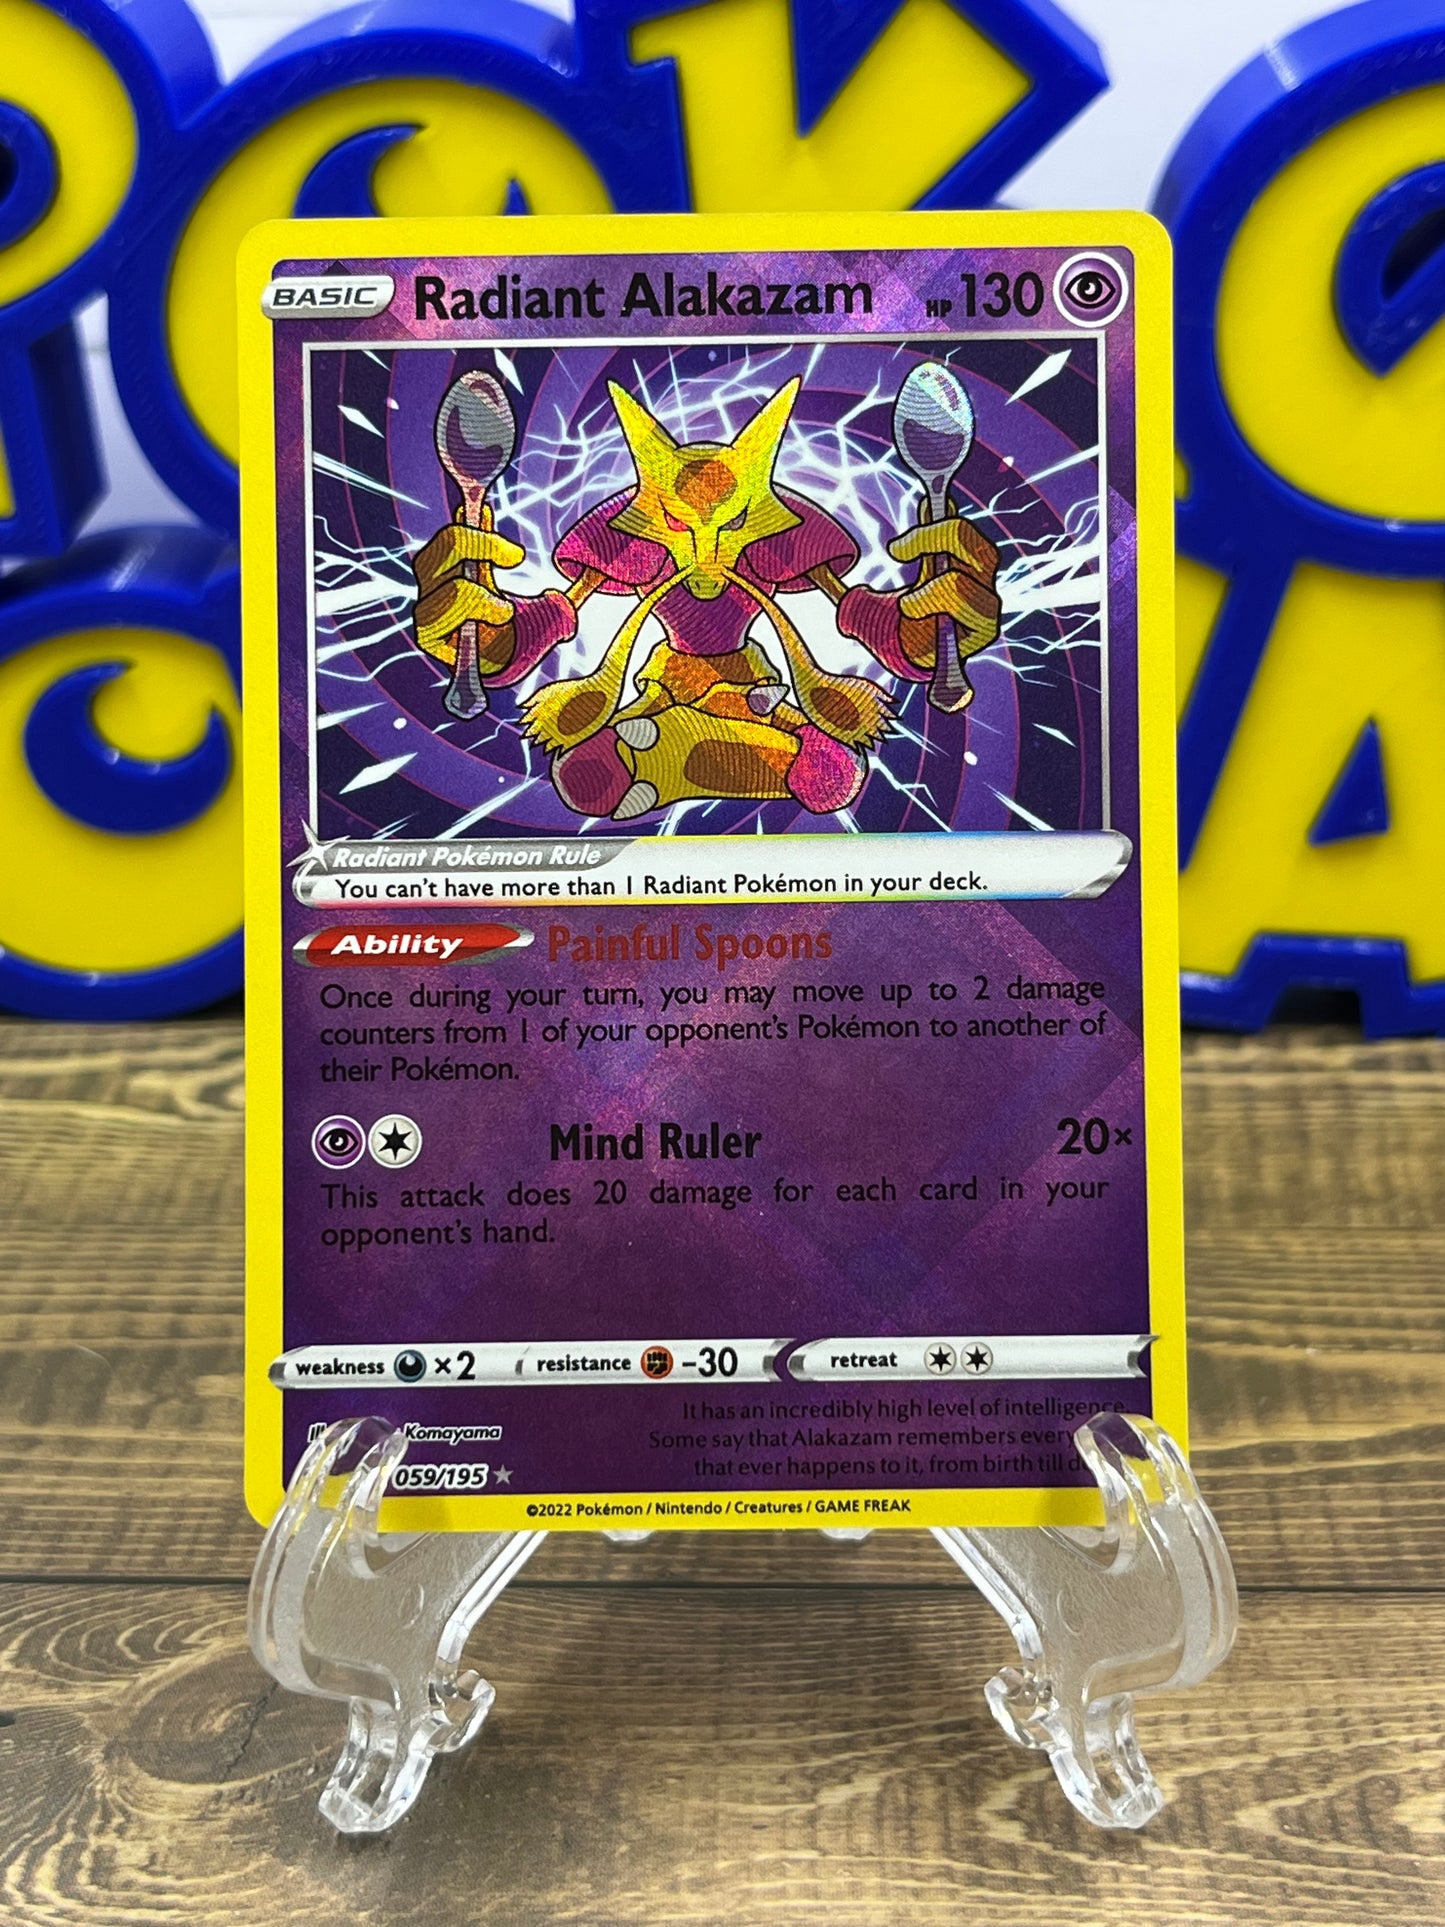 Radiant Alakazam is absolutely stunning IRL. : r/PokemonTCG